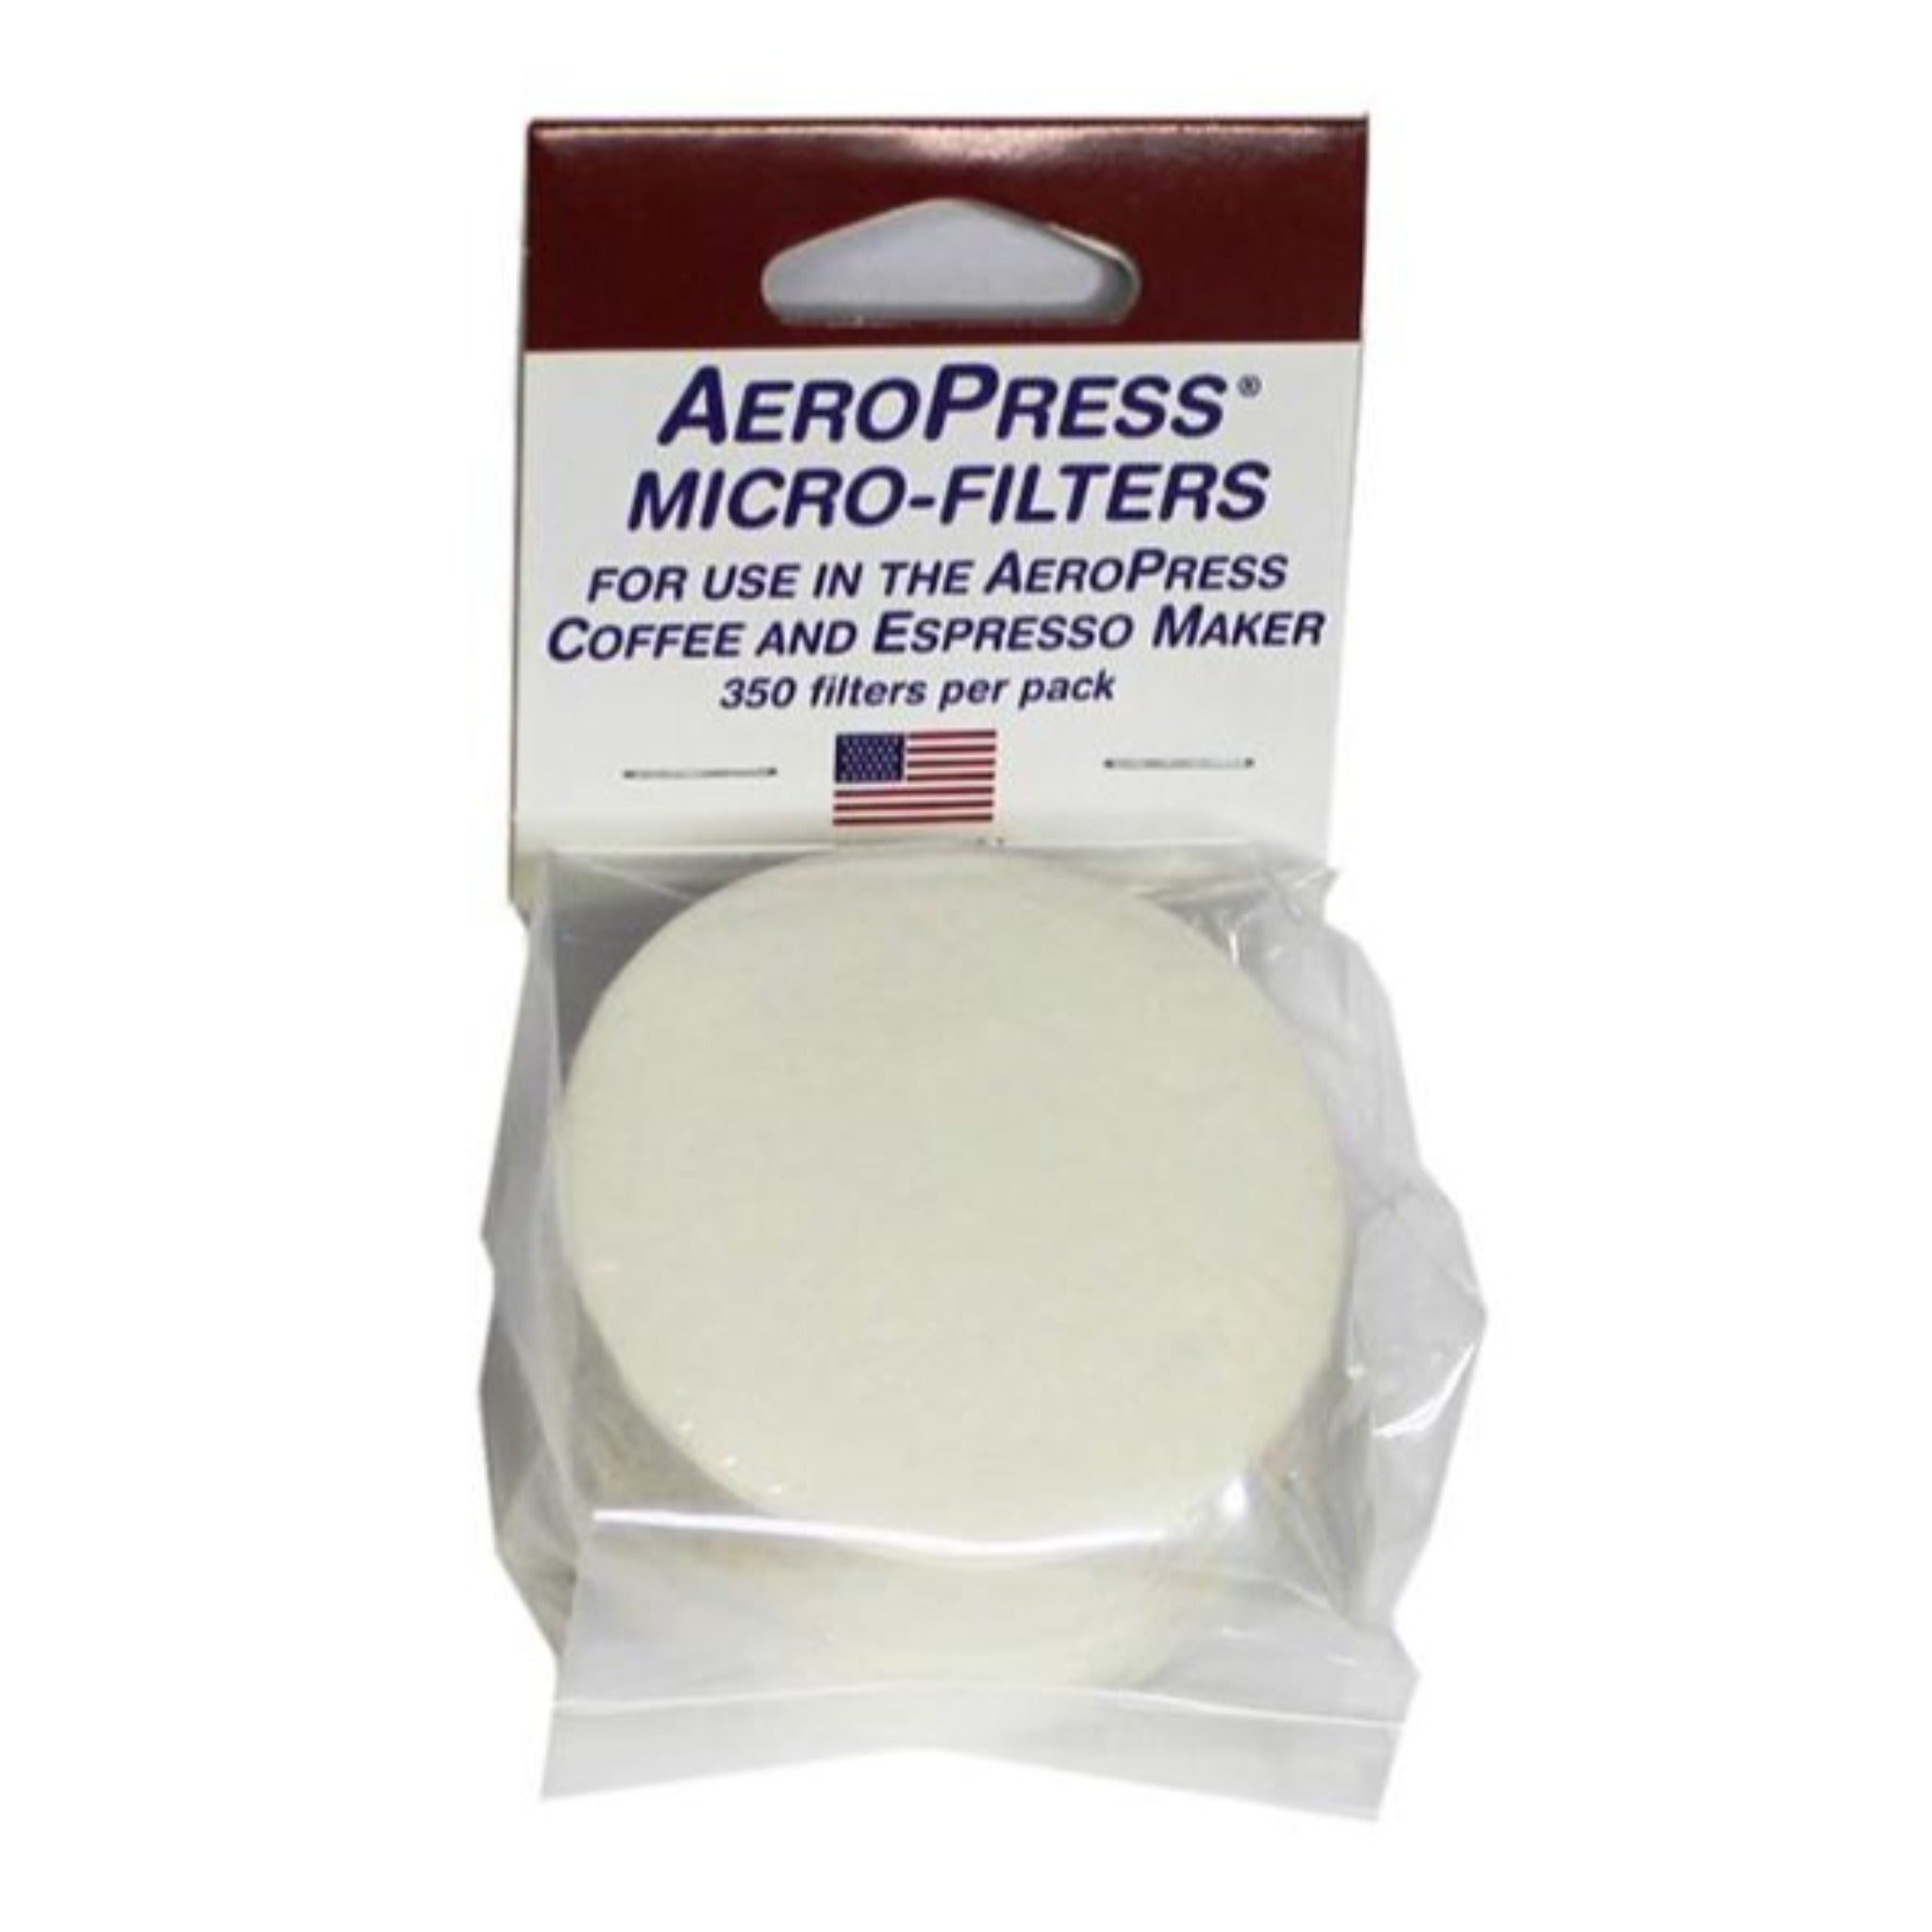 Packung mit 350 AeroPress Mikrofiltern.